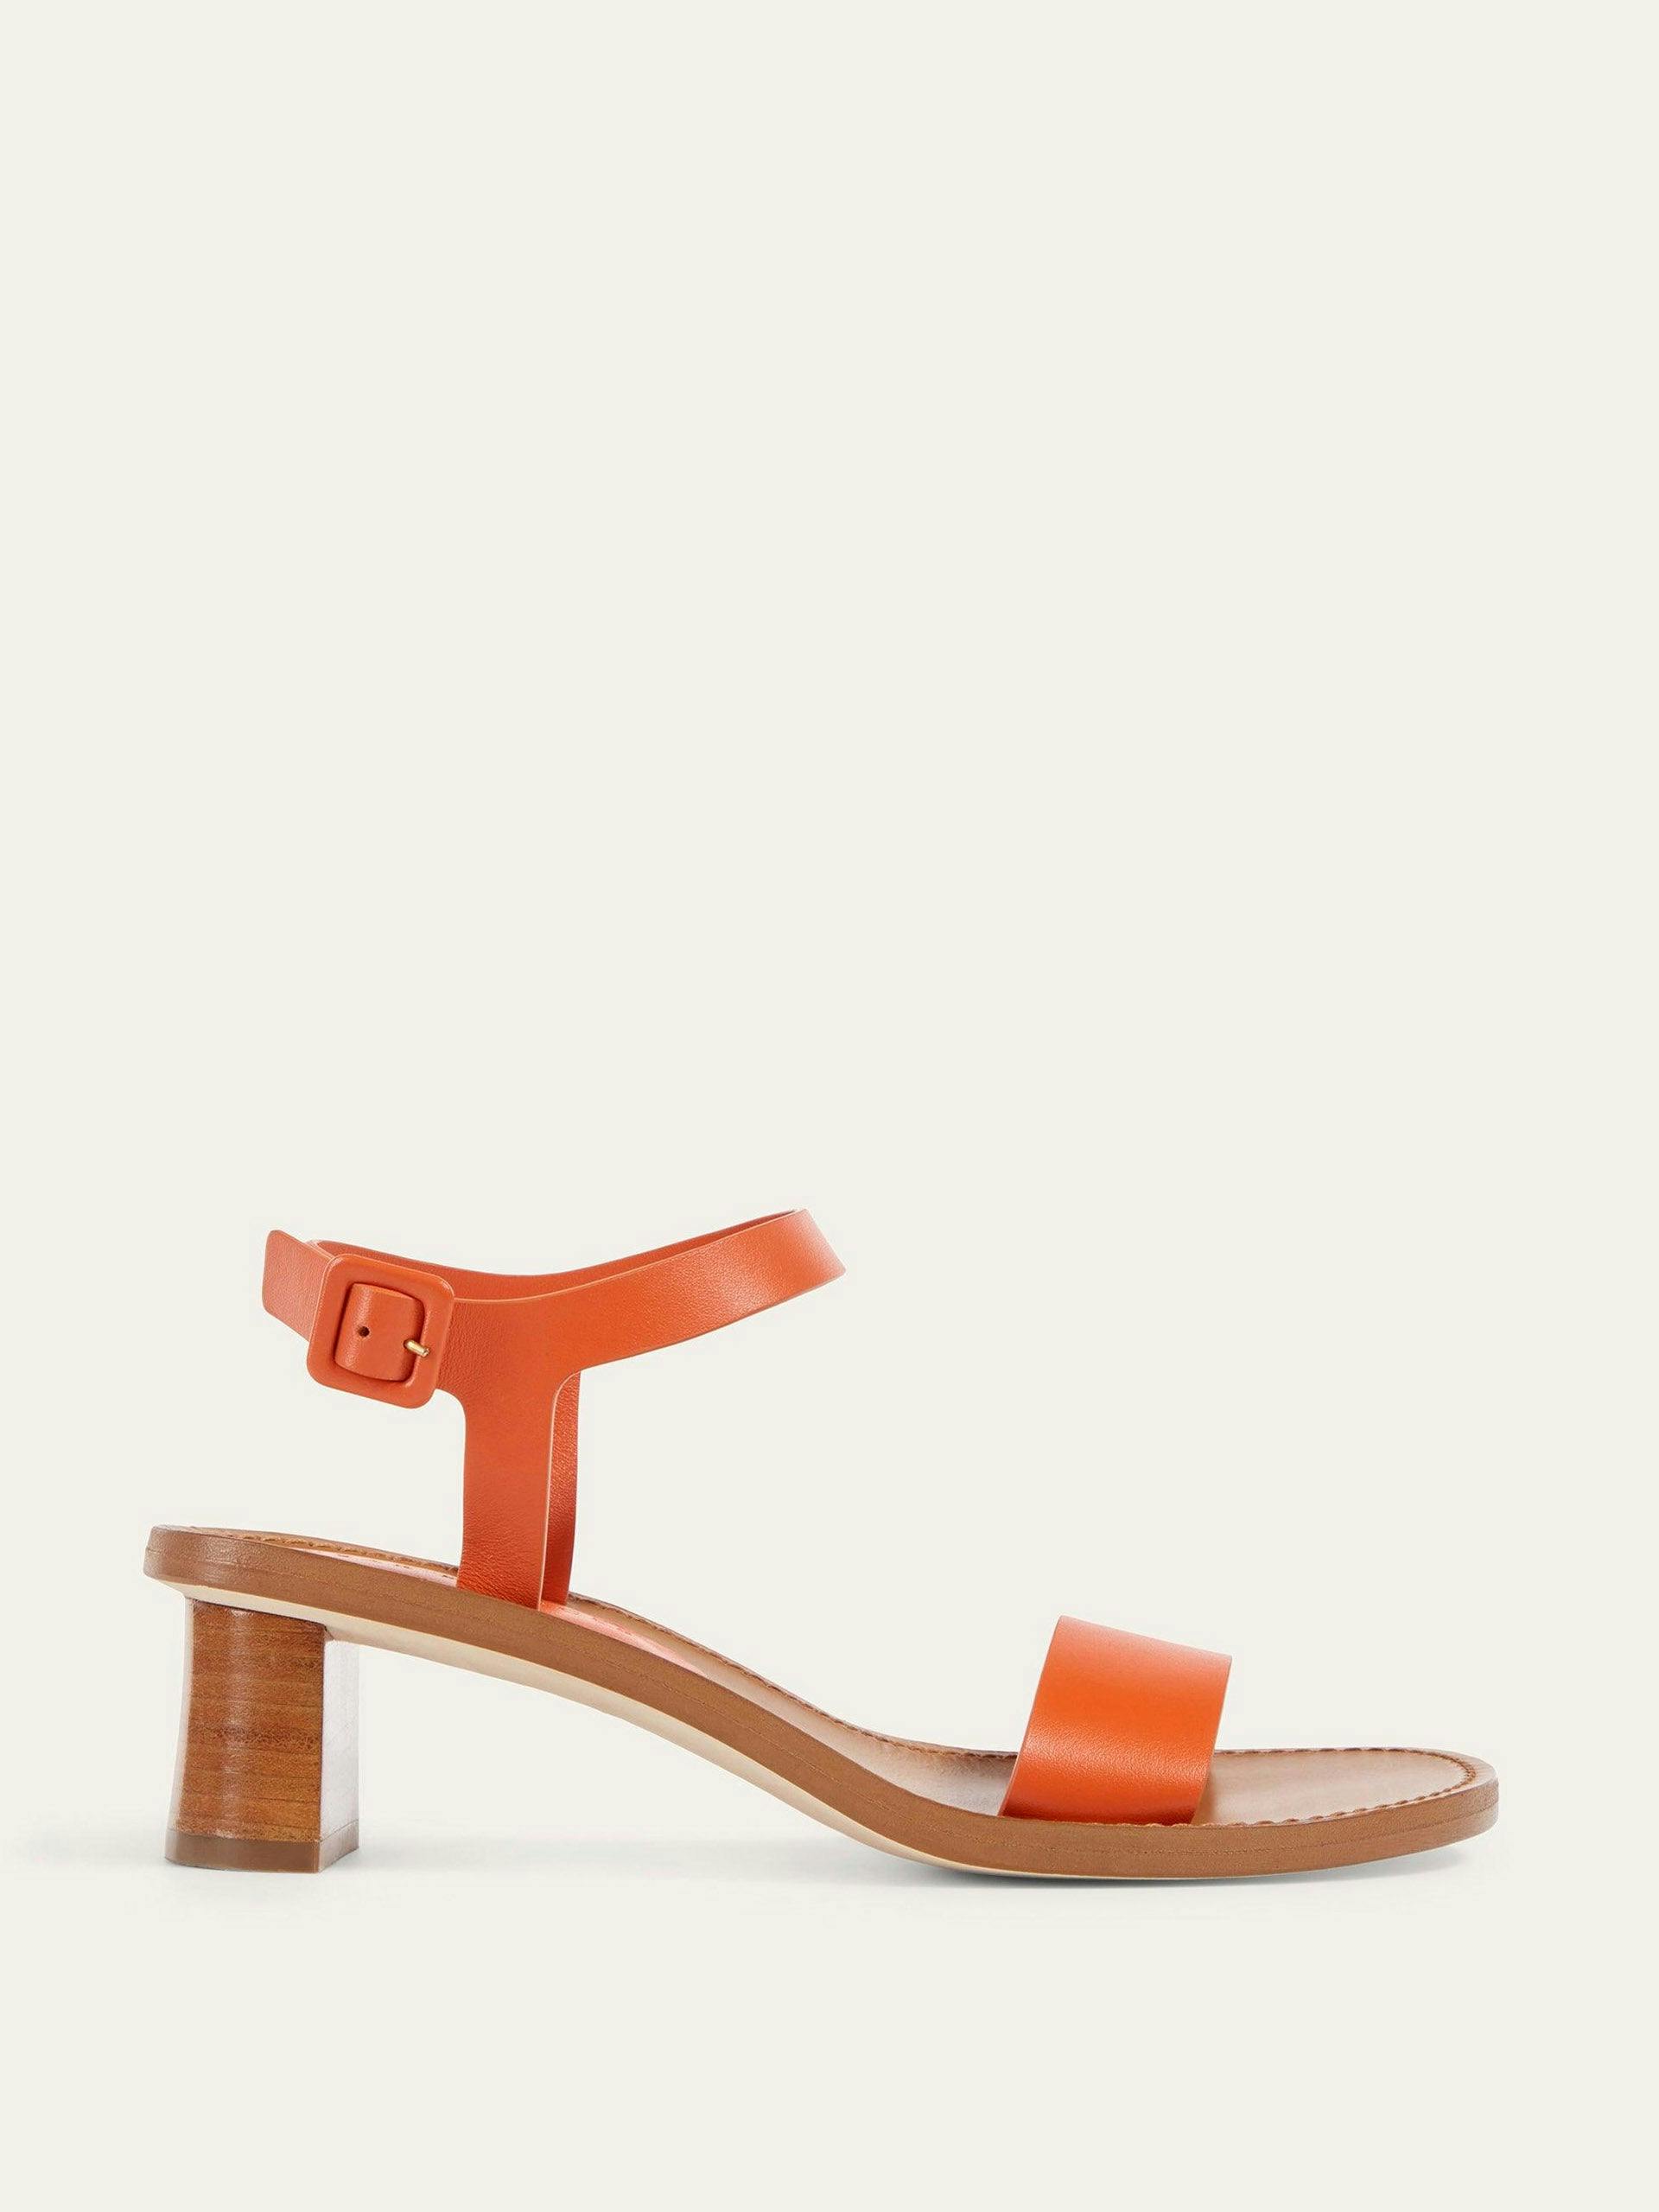 Mane orange sandal